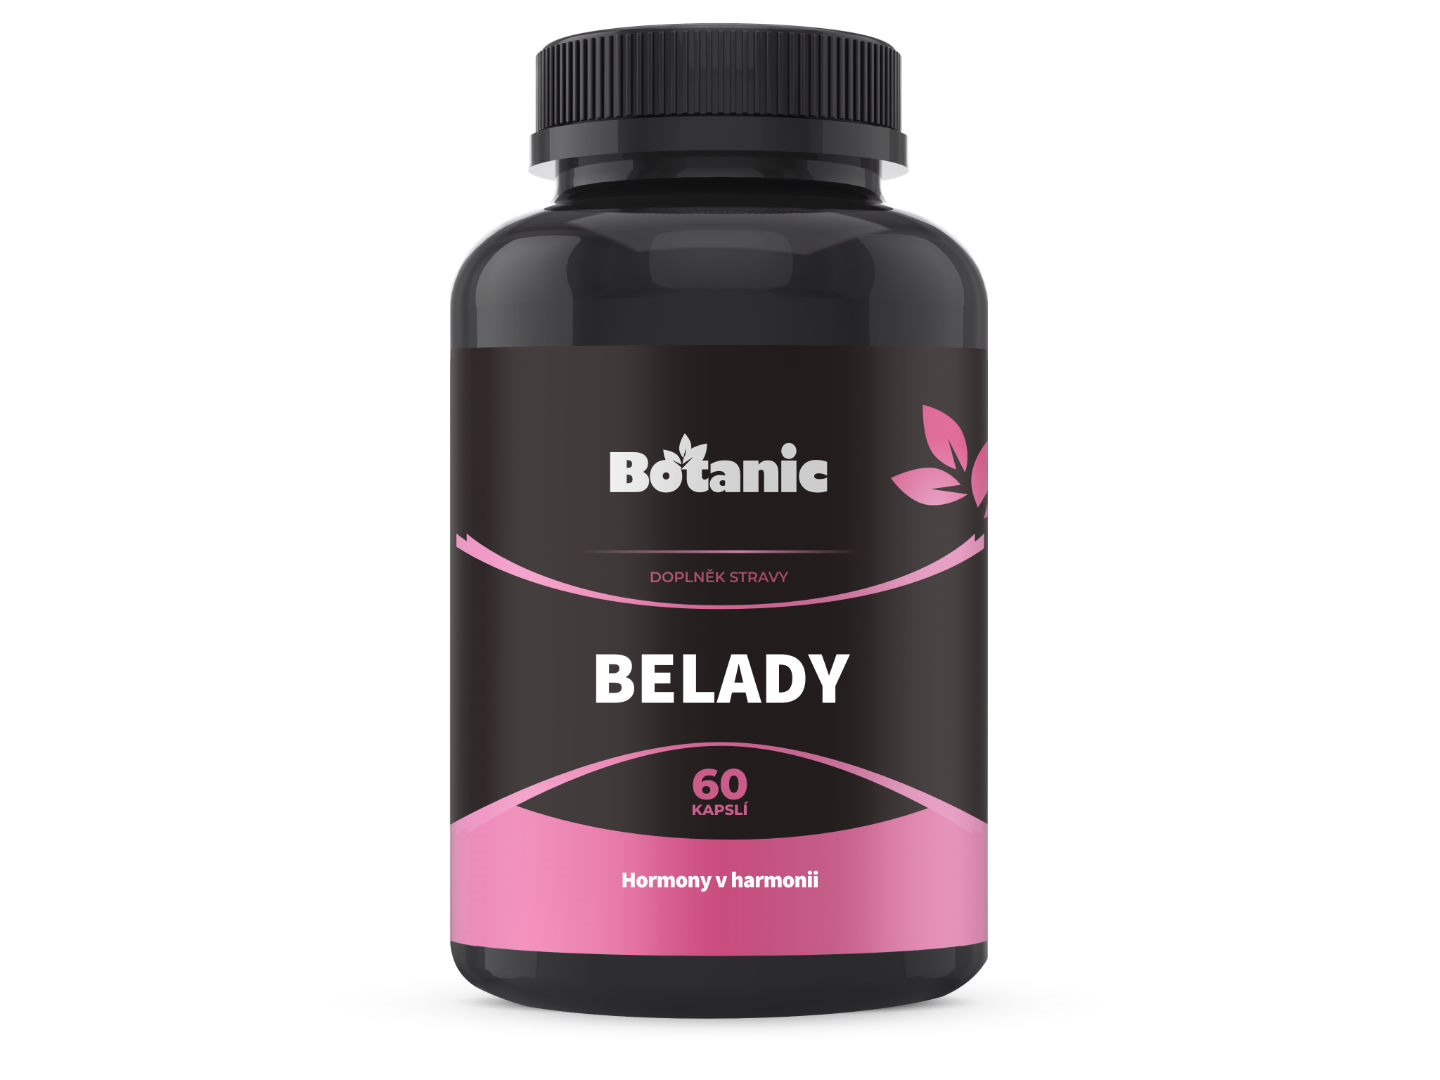 Botanic BeLady - Hormony v harmonii 60kap.